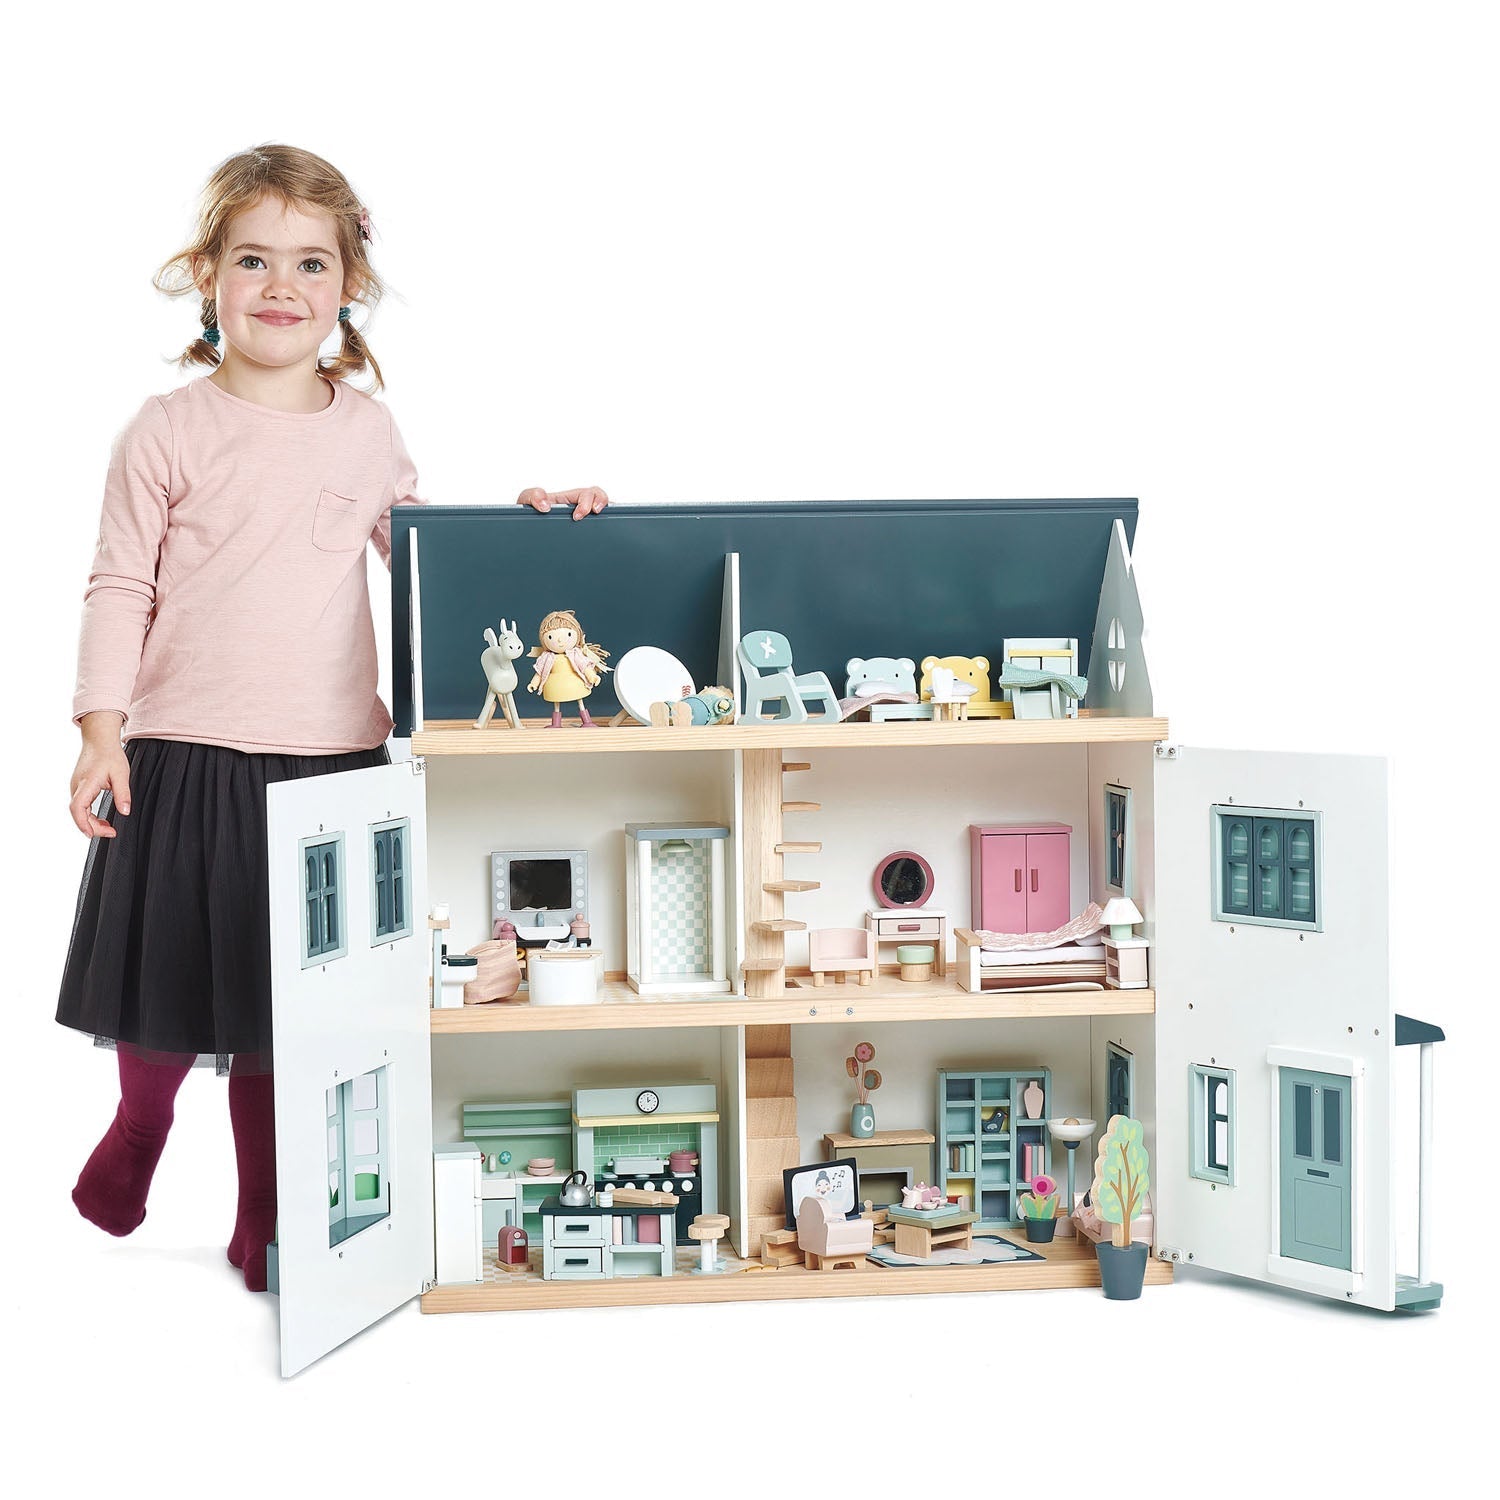 Dolls House Children's Room Furniture - Toby Tiger